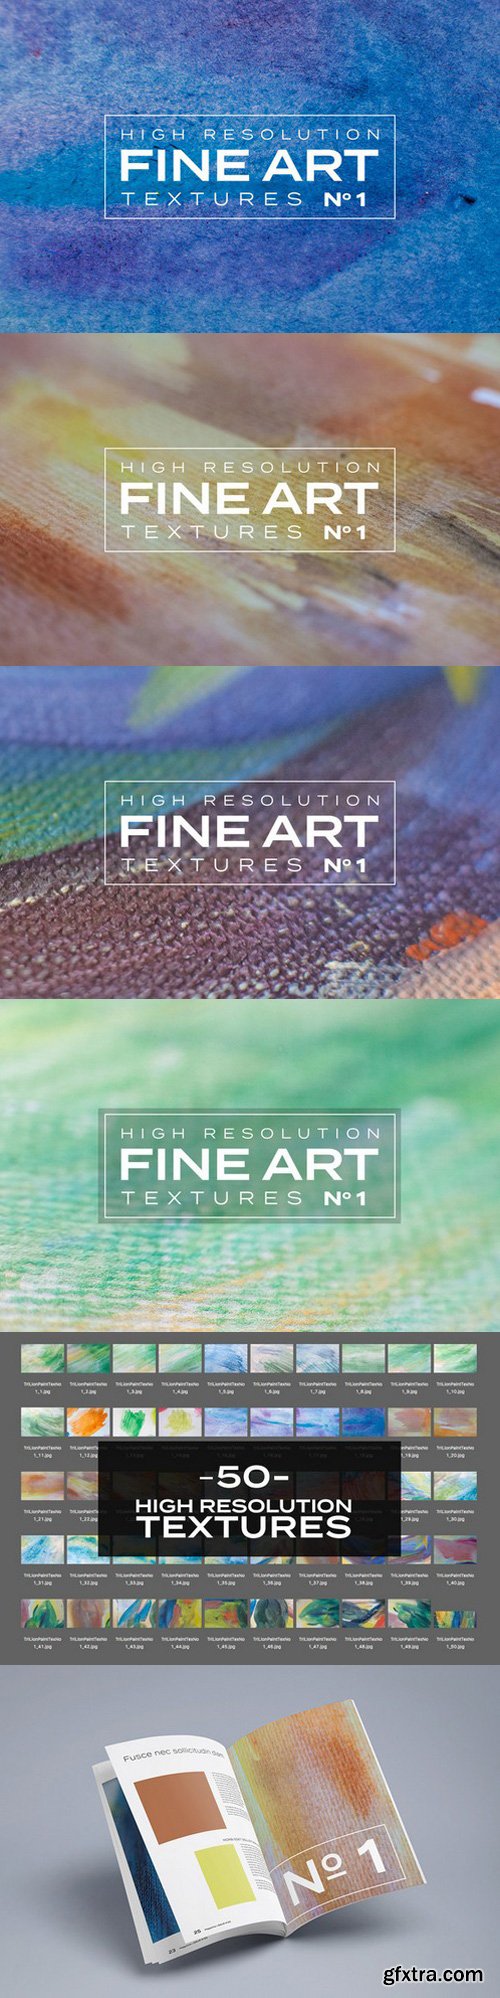 CM - High Resolution Fine Art Textures #1 586840